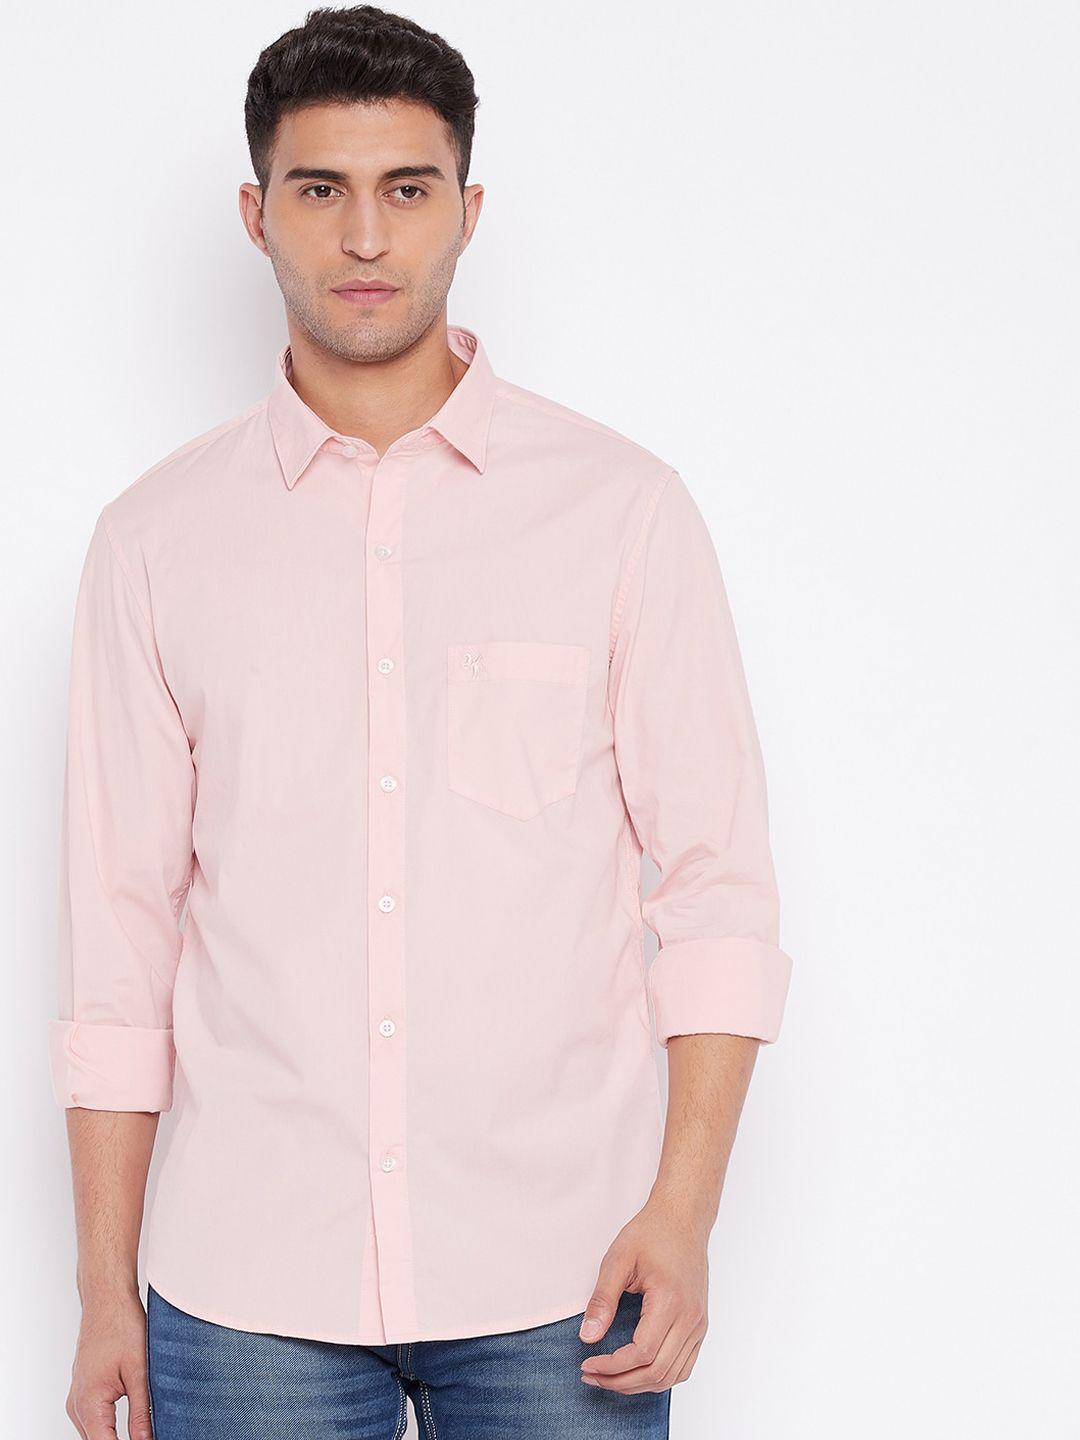 cantabil men pink solid opaque casual shirt